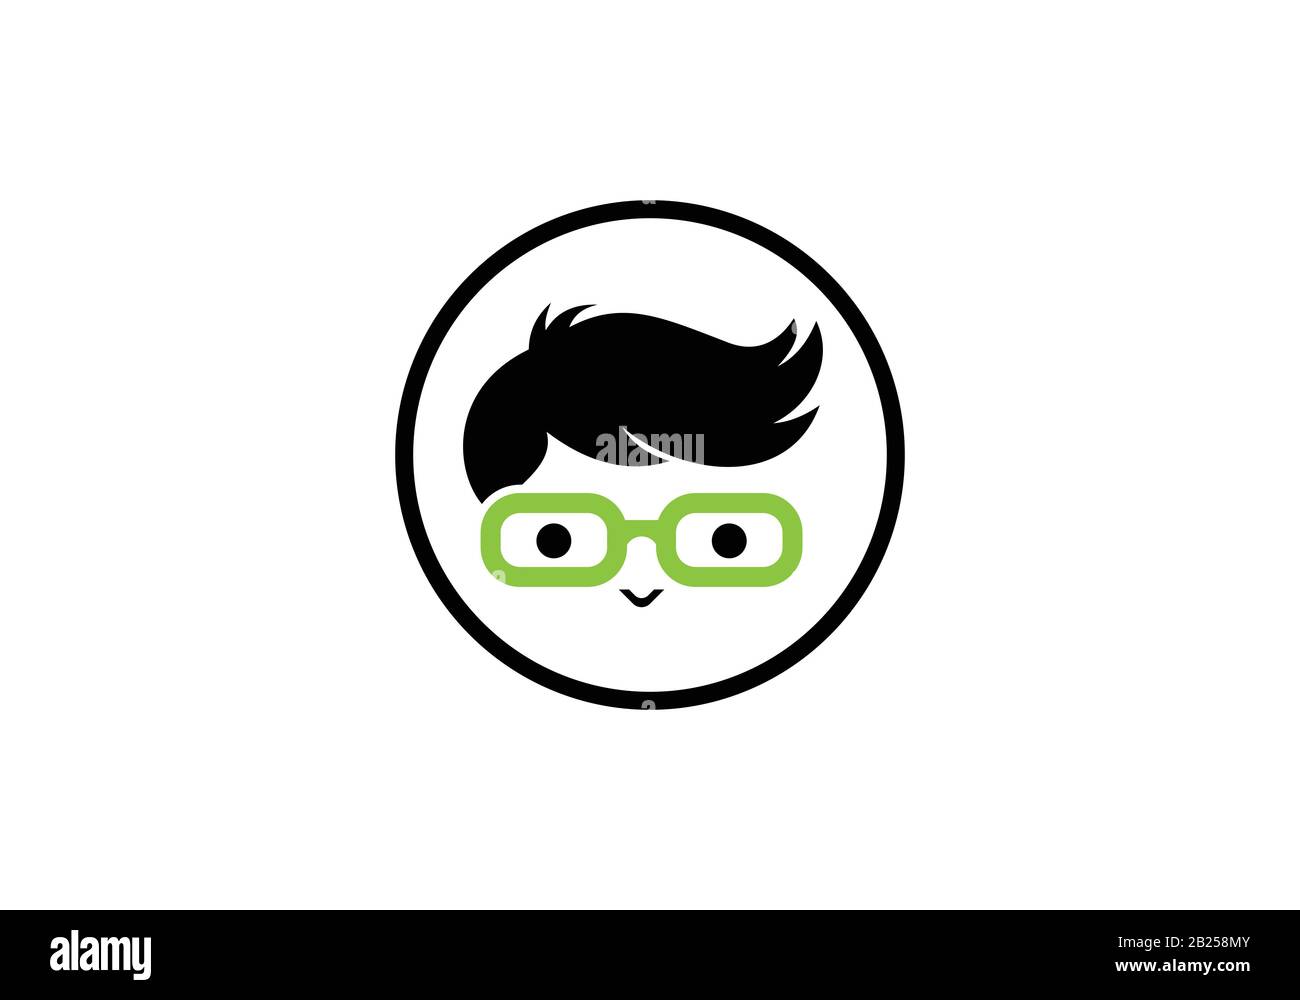 Geek Persona. Geek e nerd logo carattere Illustrazione Vettoriale